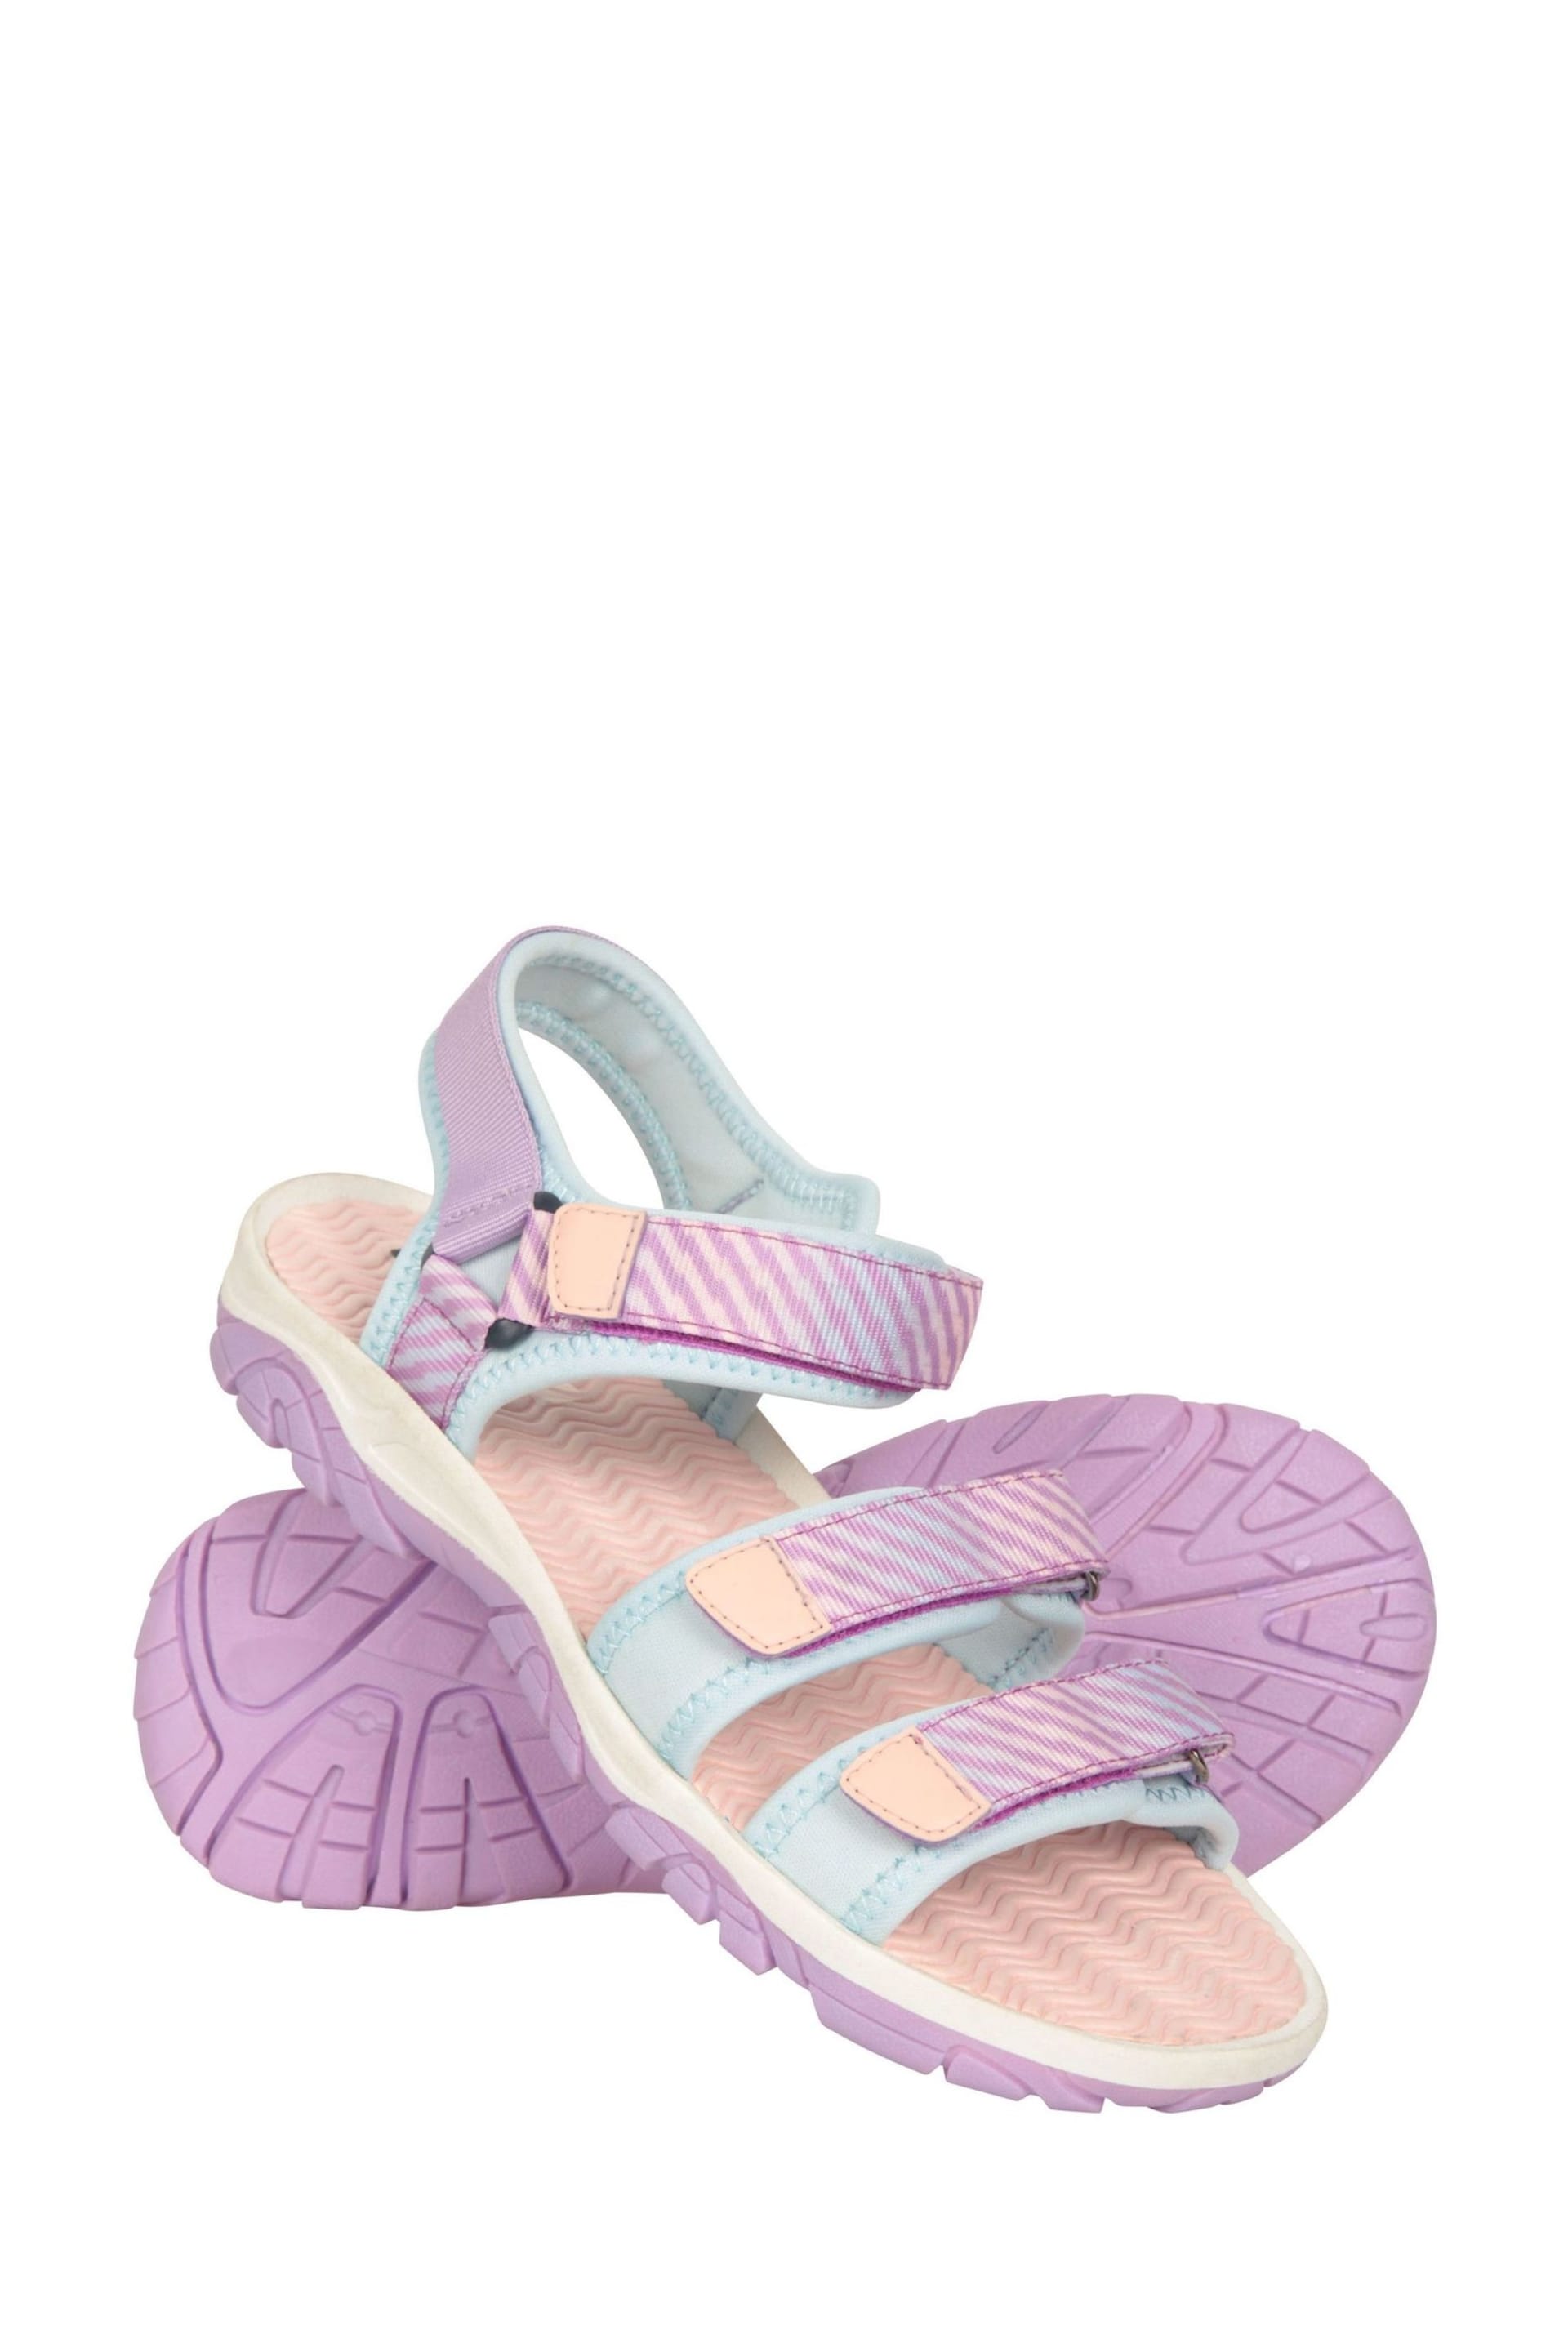 Mountain Warehouse Purple Kids 3-Strap Sandals - Image 1 of 8